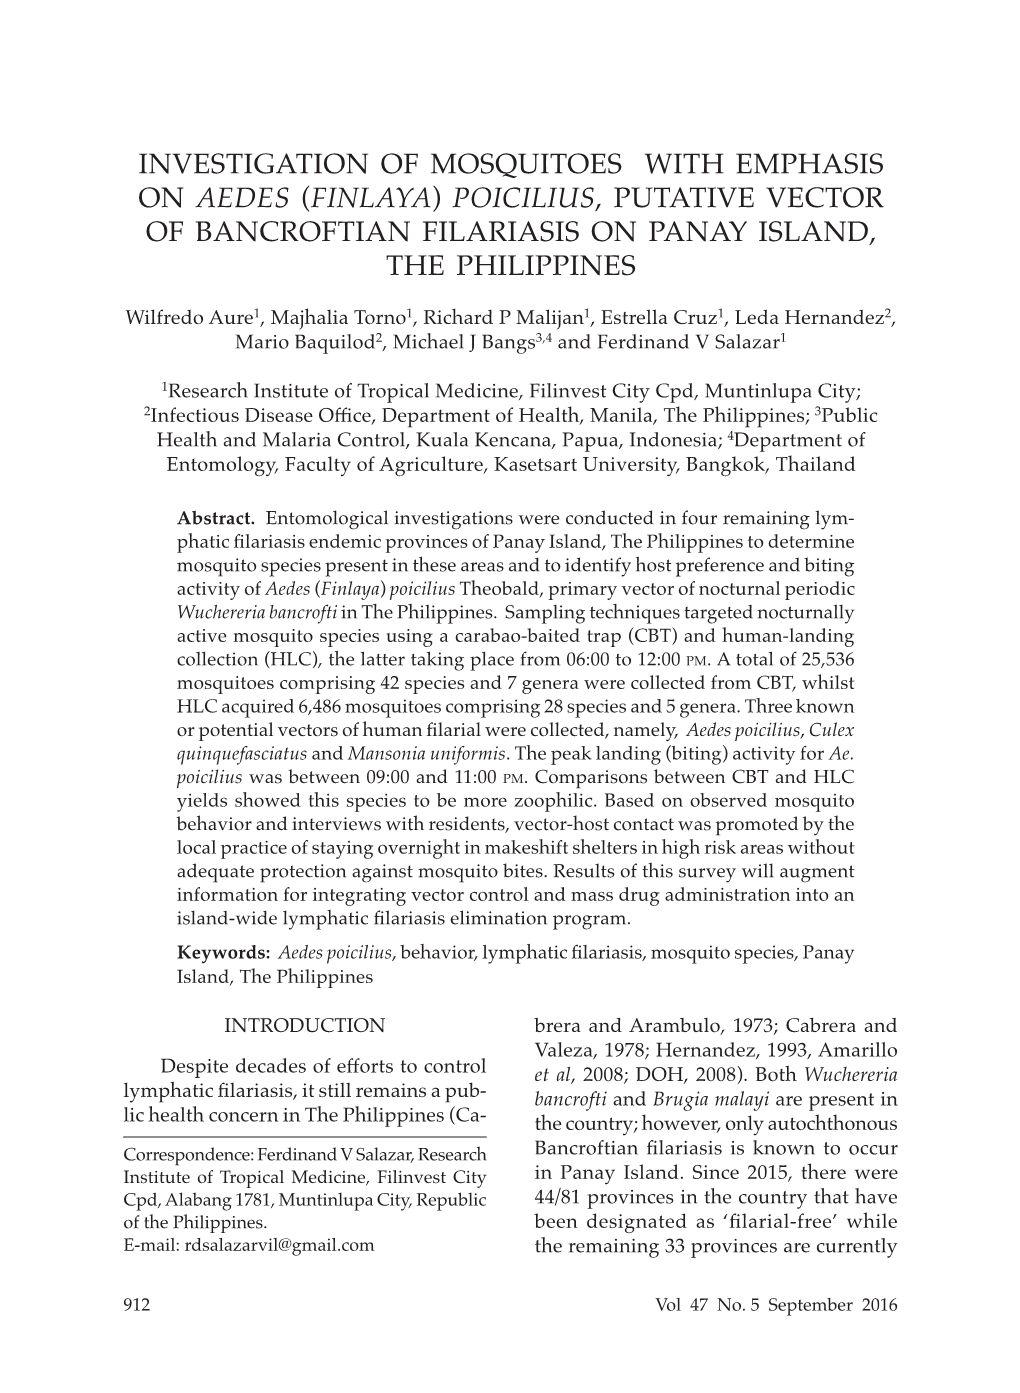 (Finlaya) Poicilius, Putative Vector of Bancroftian Filariasis on Panay Island, the Philippines